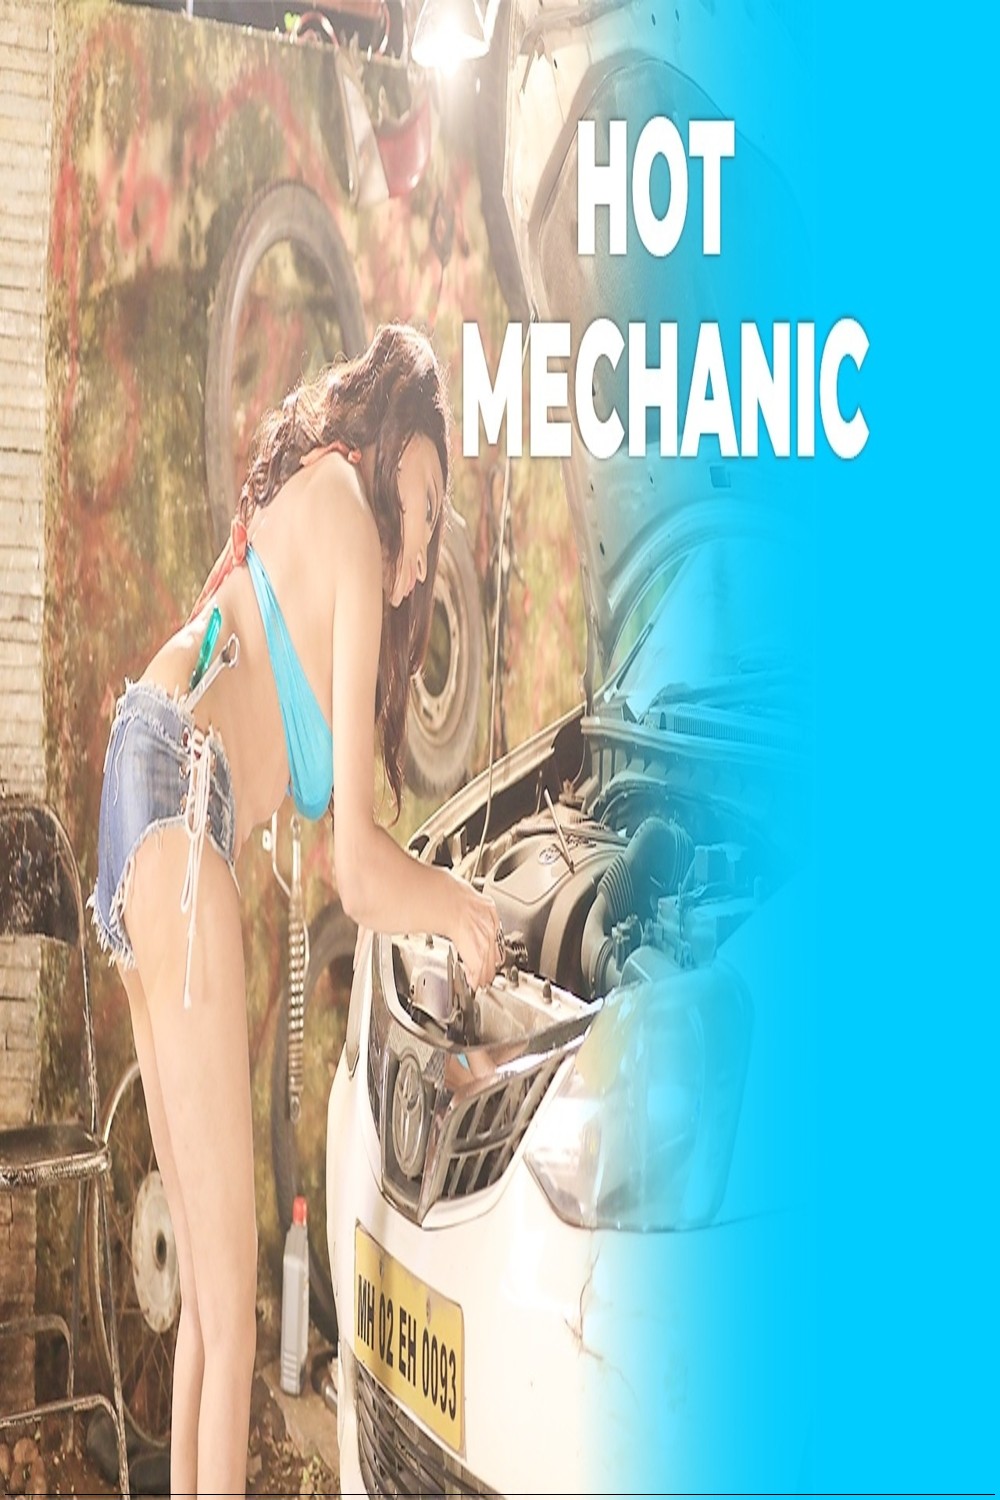 18+ Hot Mechanic By Sherlyn Chopra 2019 Hindi 720p WEBRip 40MB Download